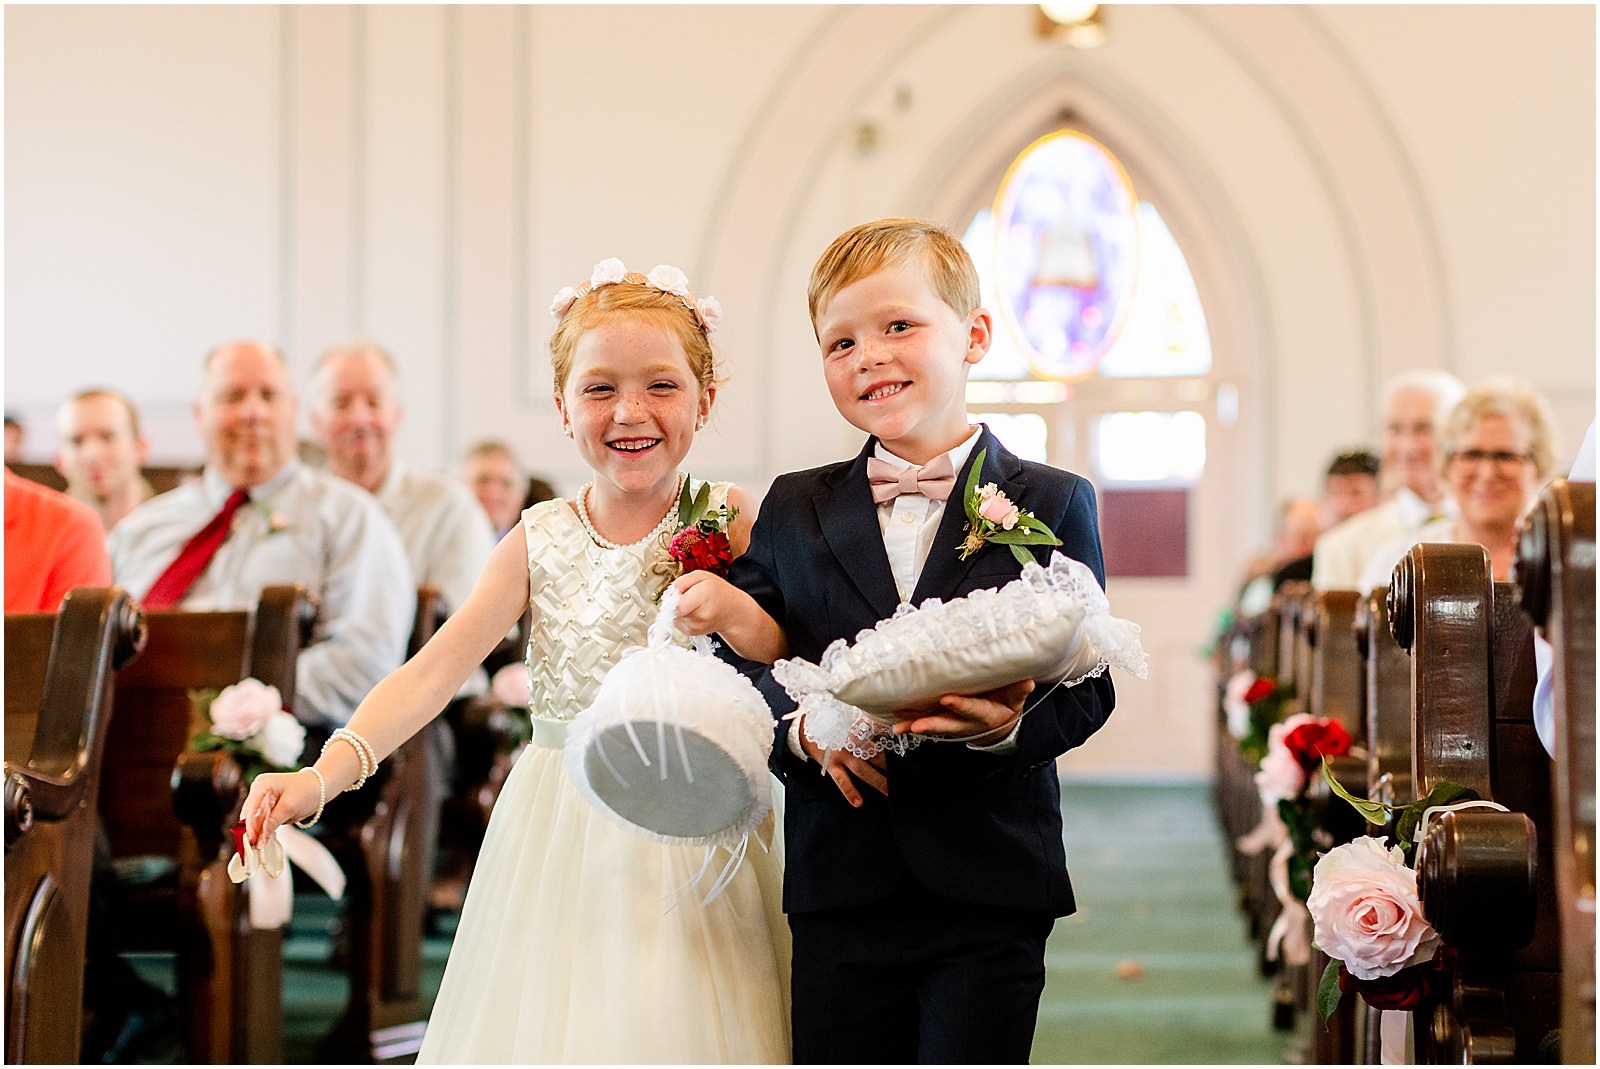 Deidra and Andrew | A Huntingburgh Indiana Wedding Bret and Brandie | Evansville Photographers | @bretandbrandie-0100.jpg